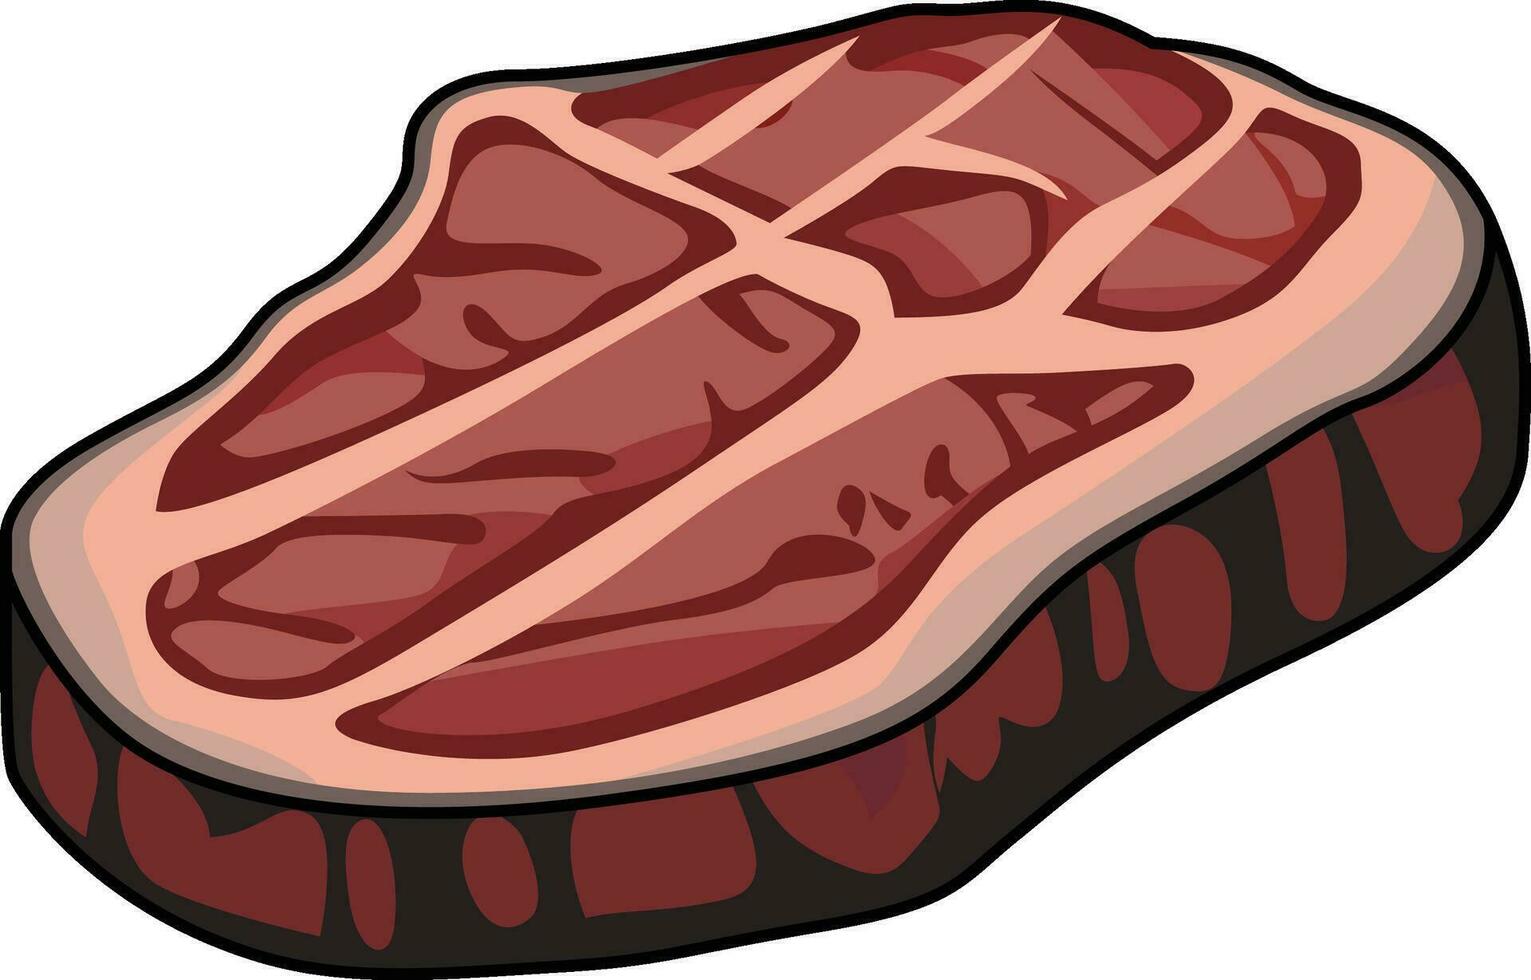 Detailed cooked steak, stock vector illustration, BBQ steak slice, meat slice stock vector image